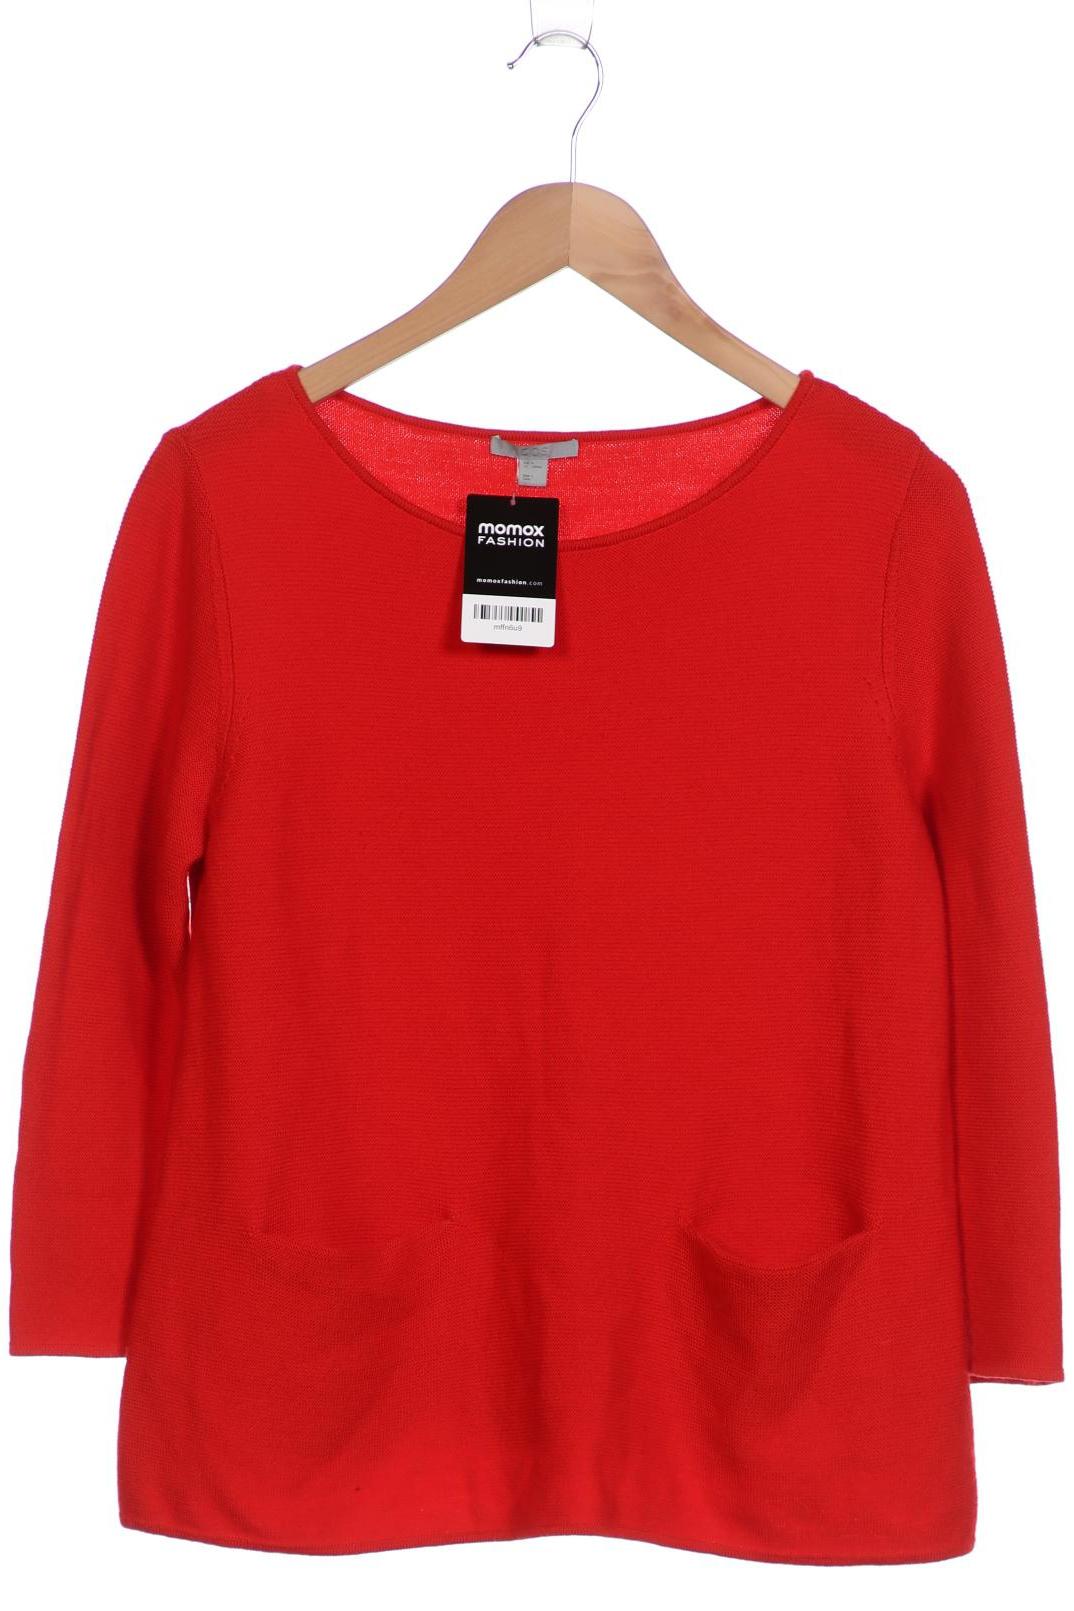 COS Damen Pullover, rot von COS